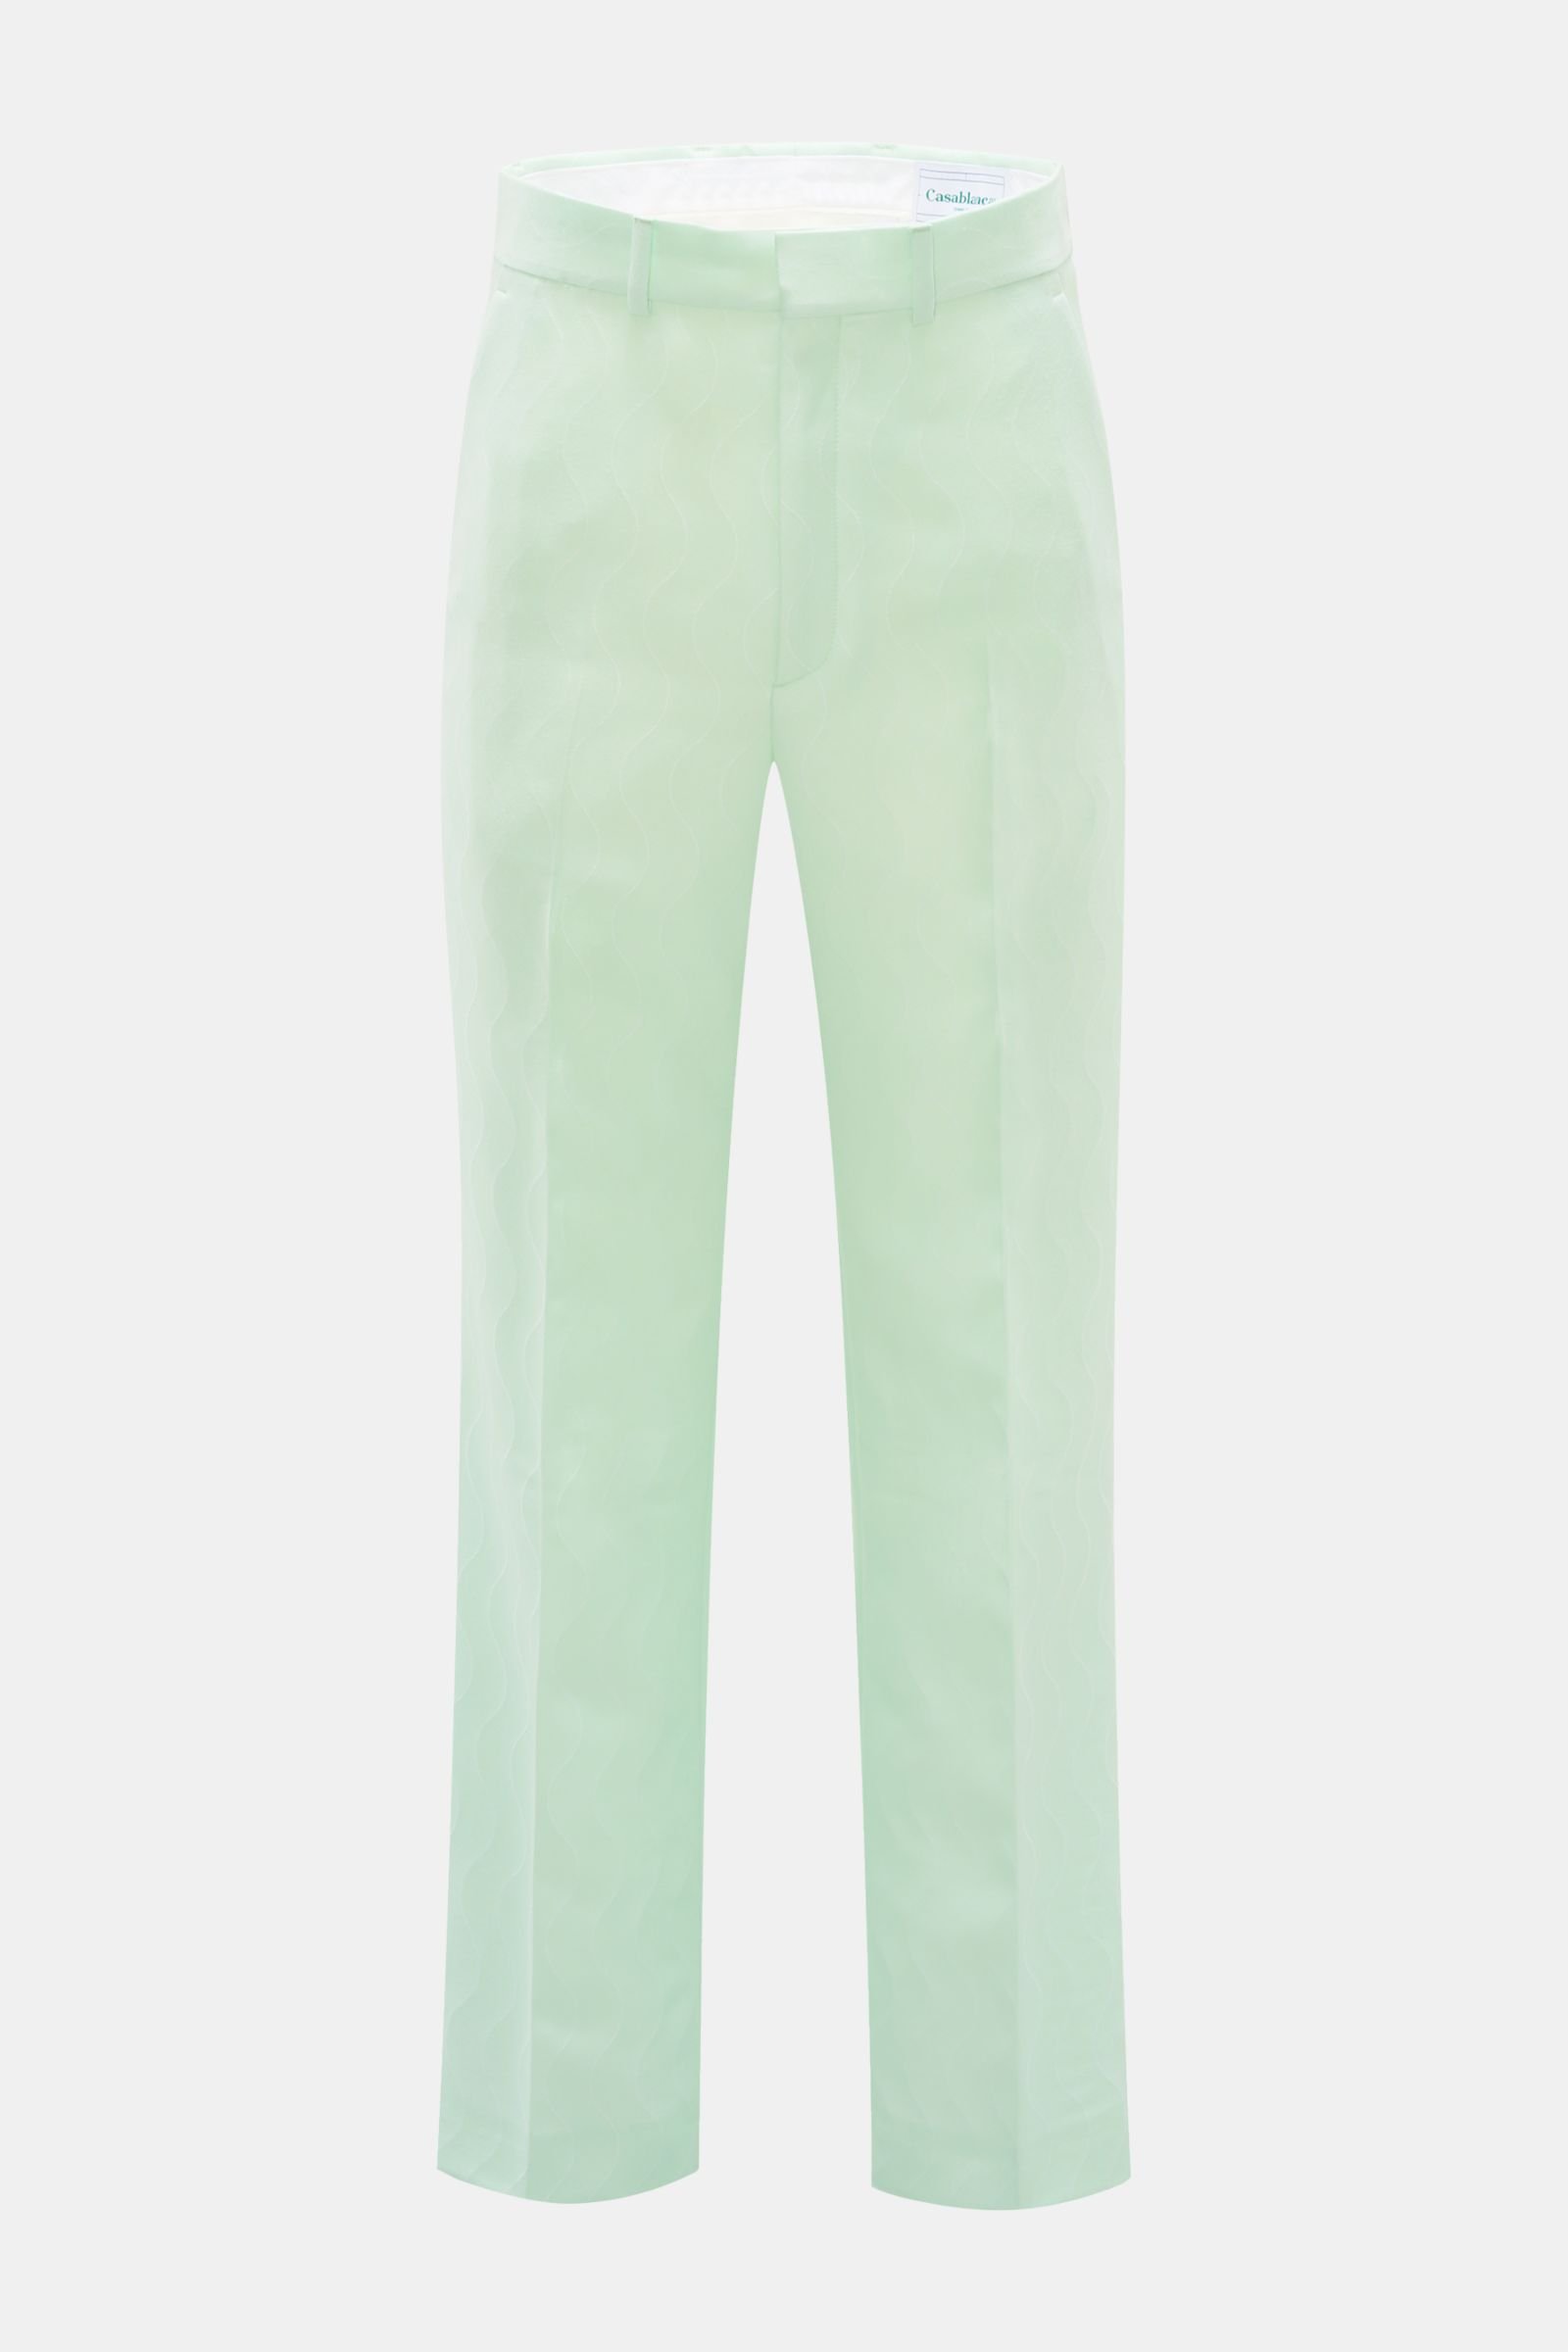 Trousers mint green